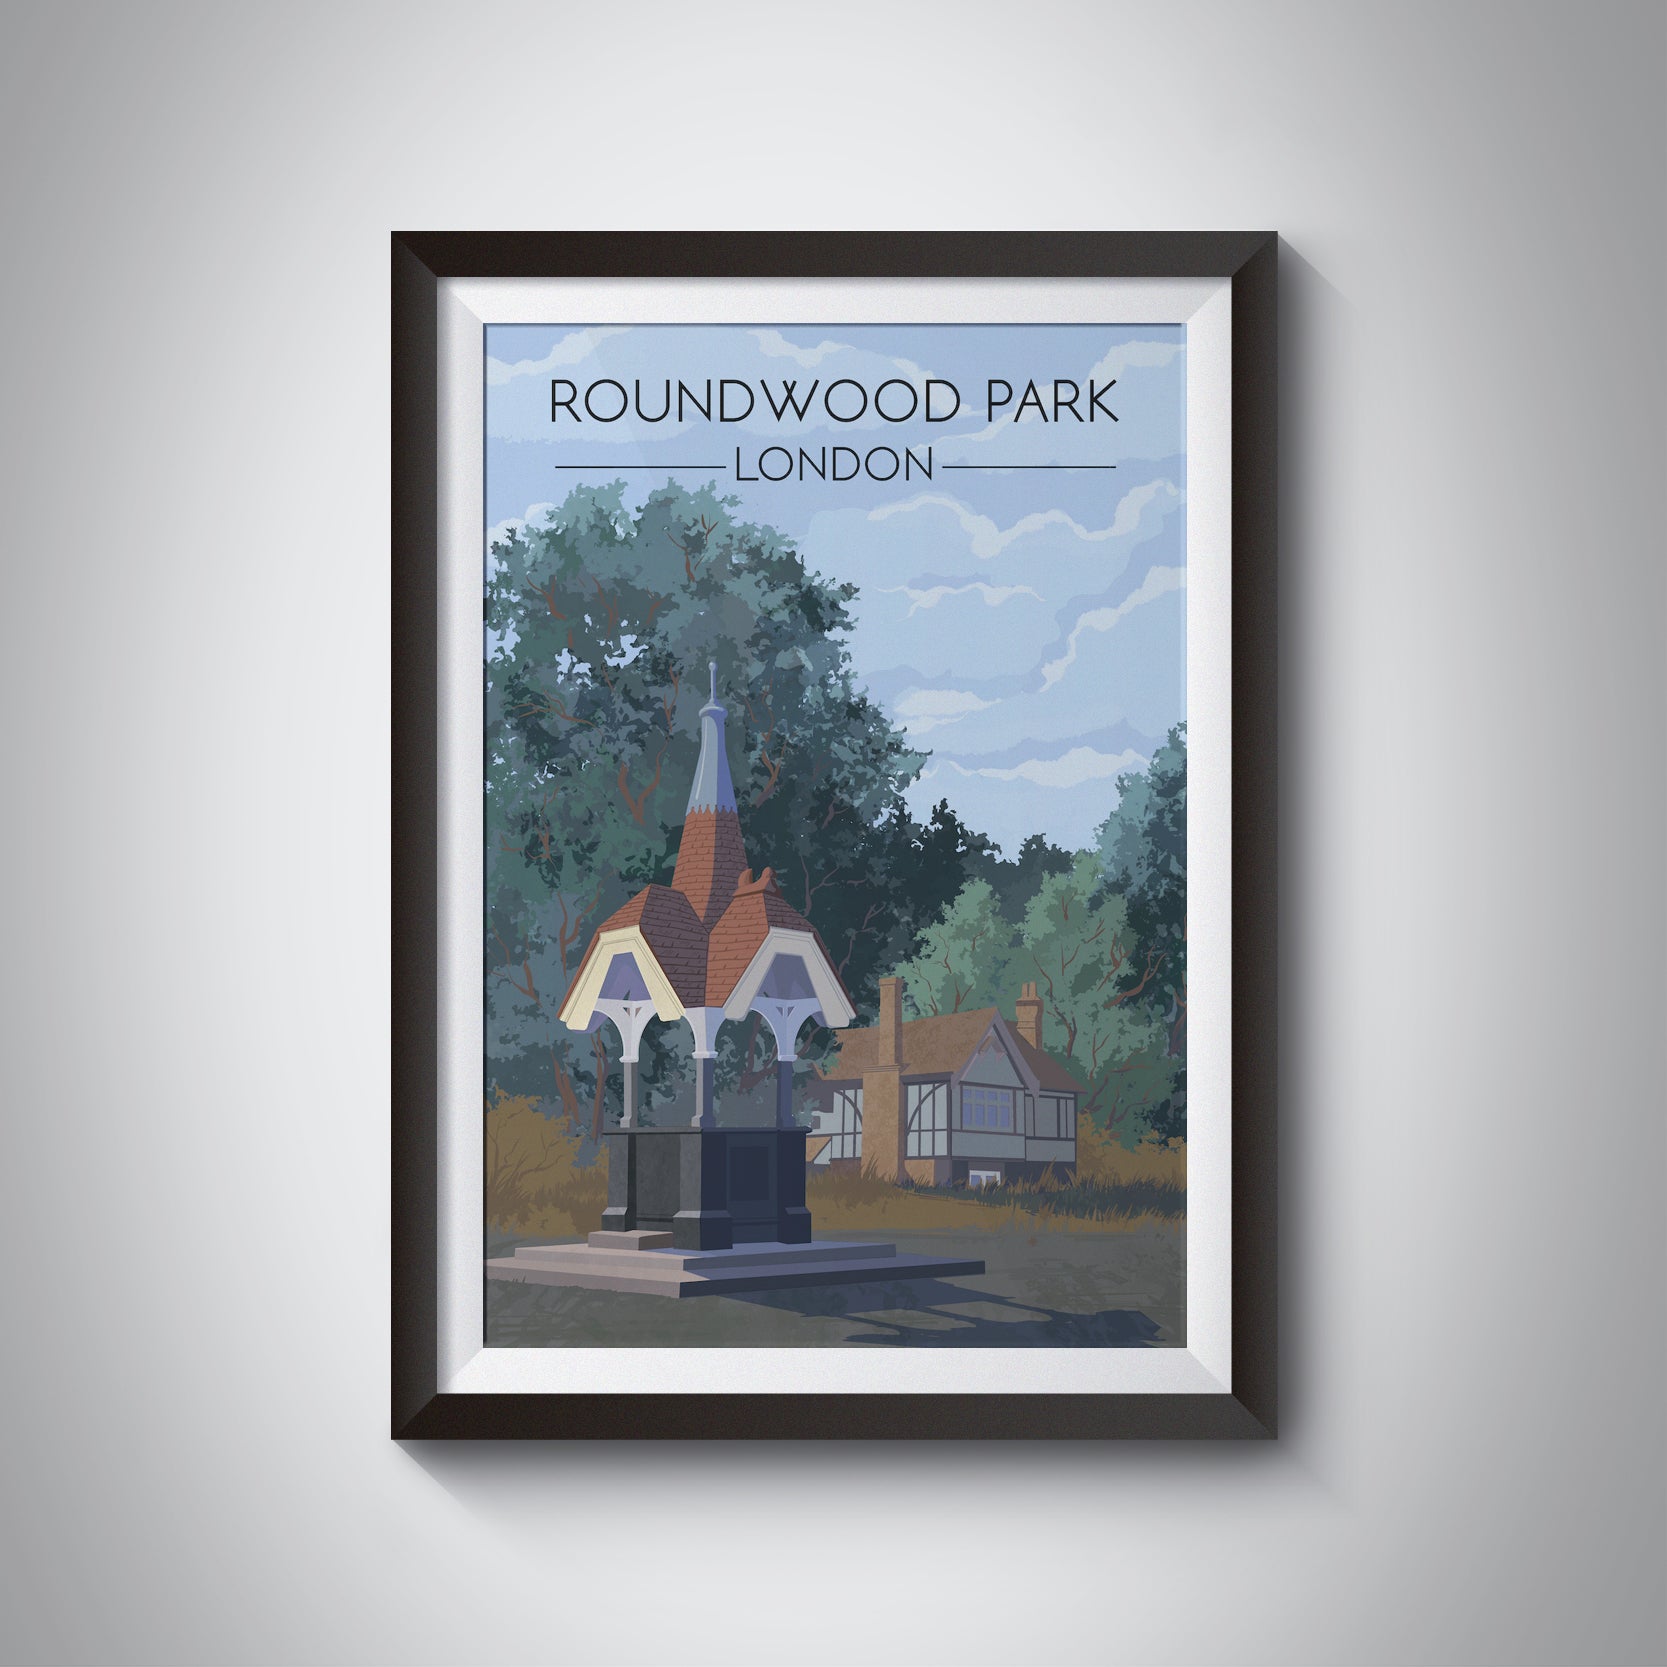 Roundwood Park London Travel Poster